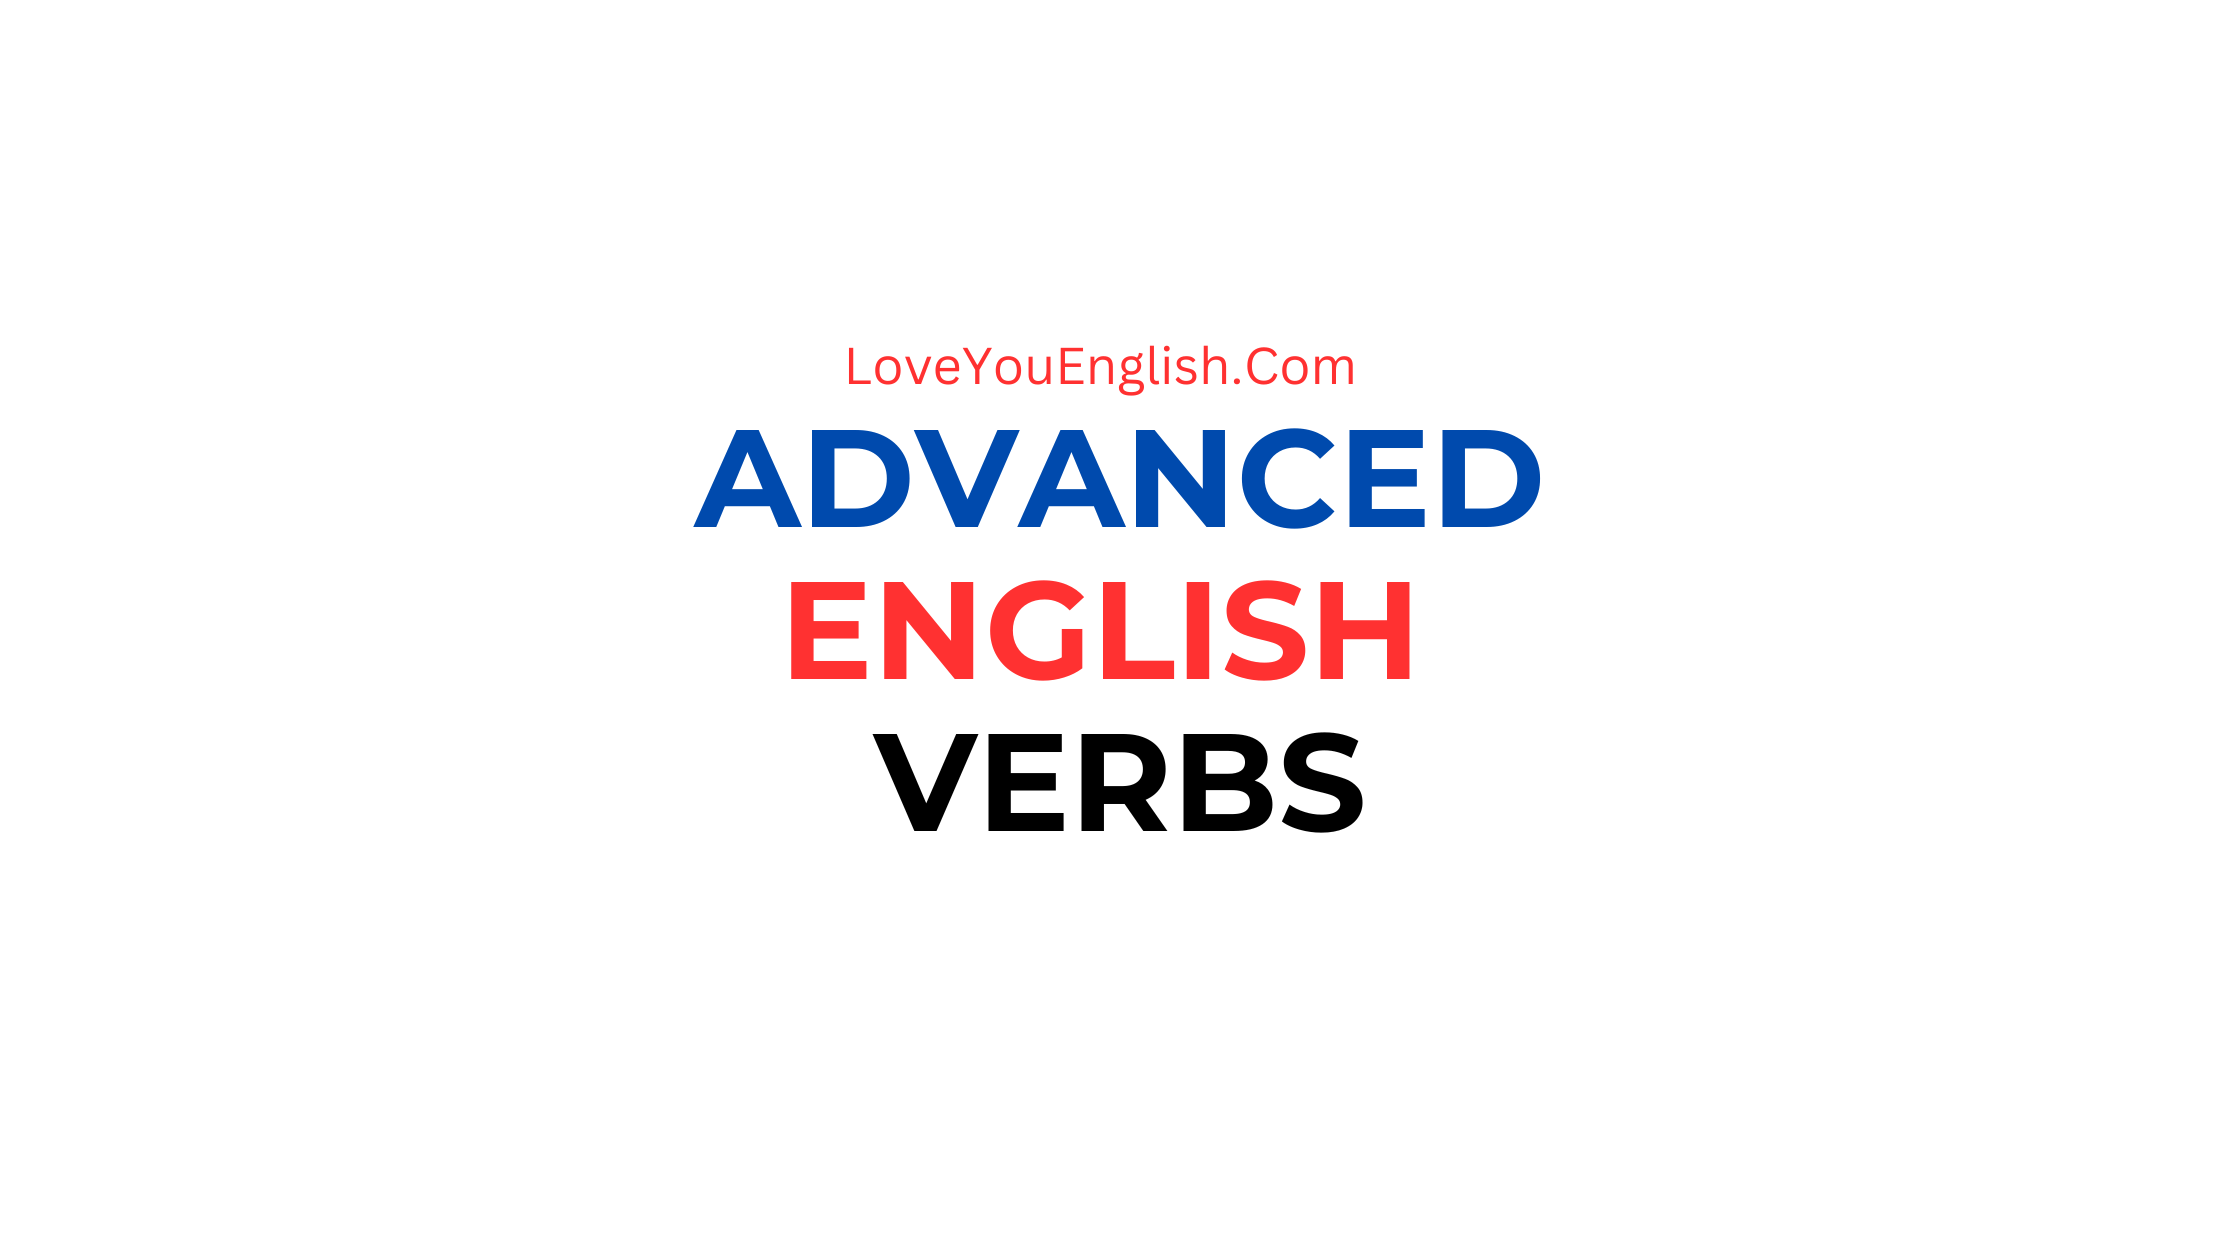 Mastering Advanced English Verbs: 10 Powerful Verbs